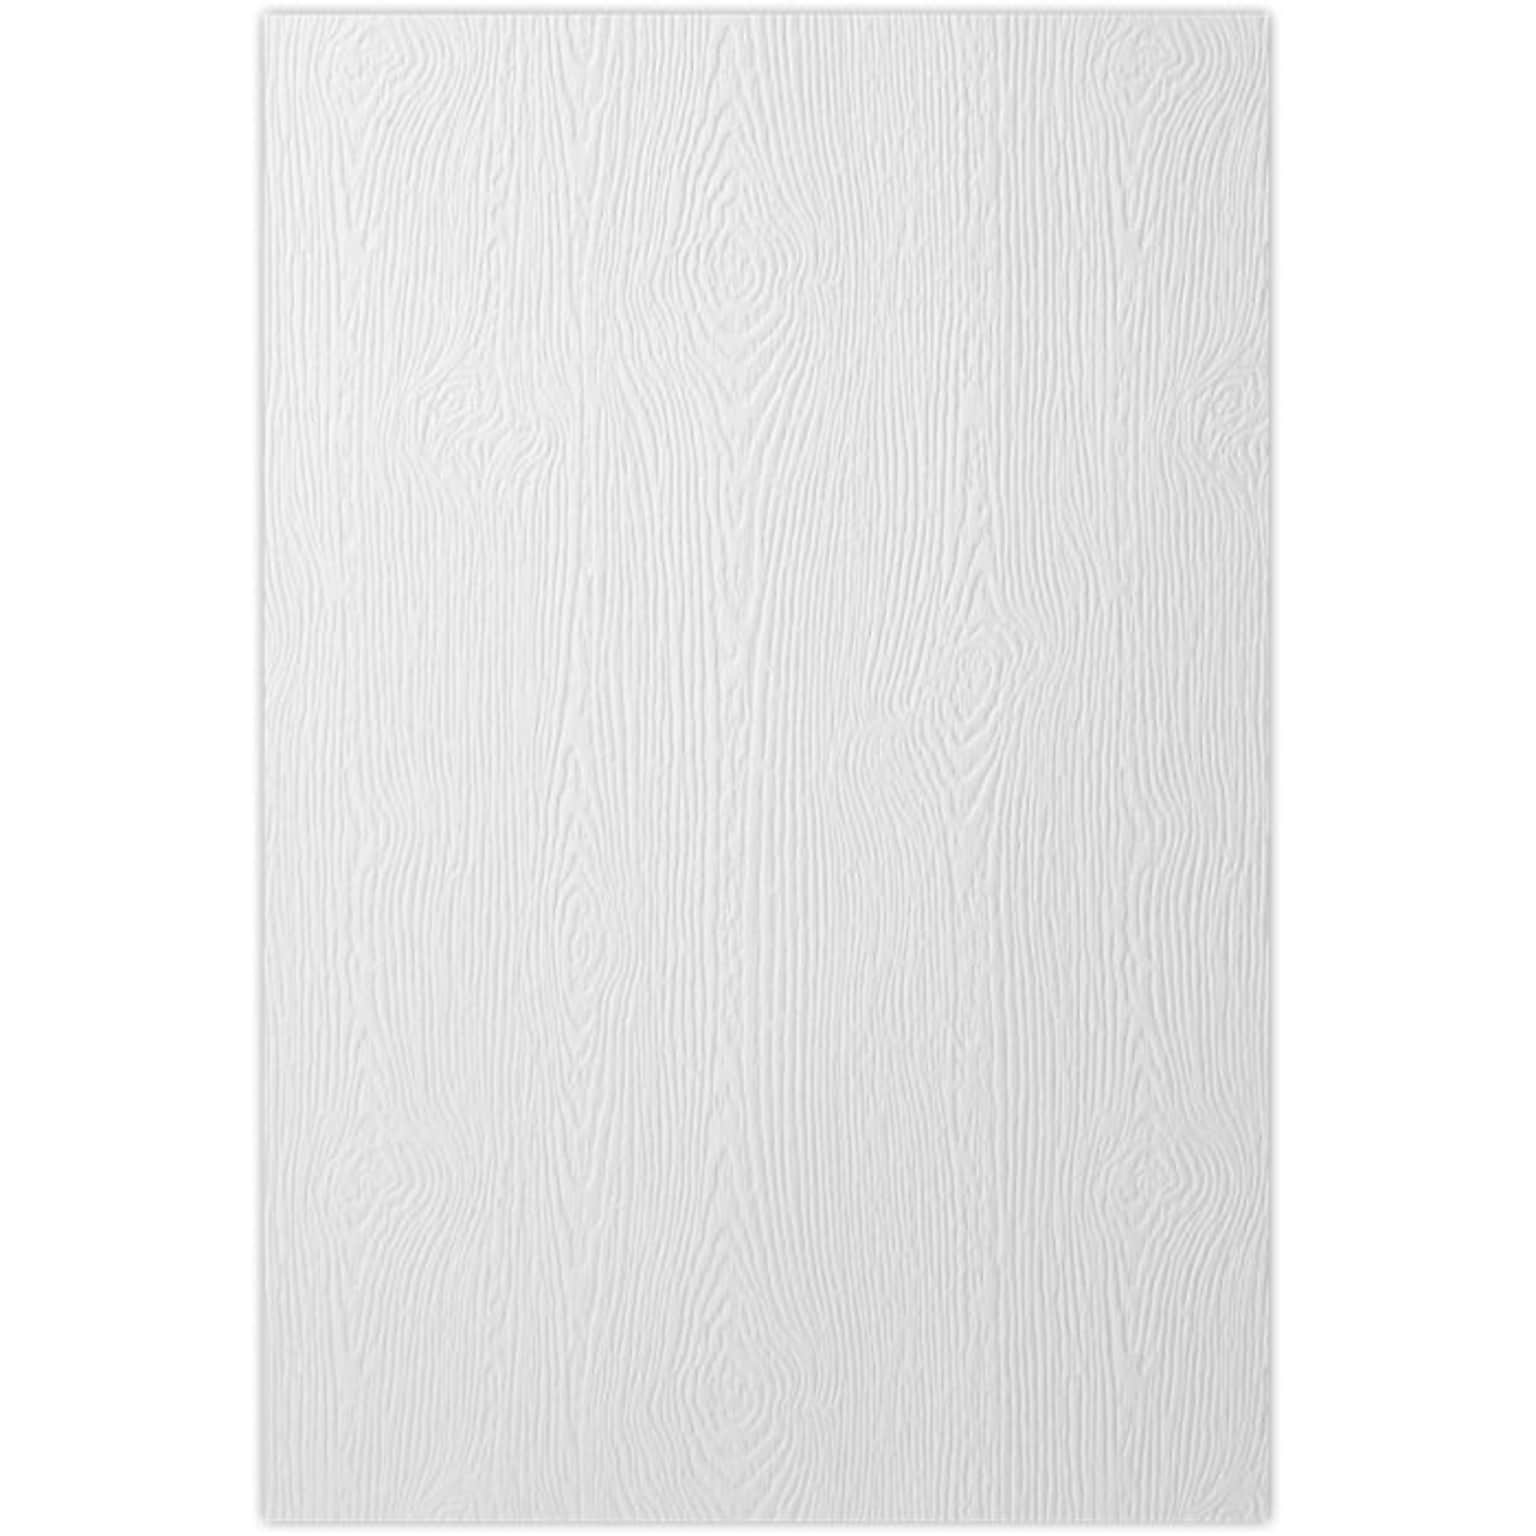 LUX Woodgrain 12 x 18 Specialty Paper, 67 lbs., 50 Brightness, White Birch Woodgrain, 50 Sheets/Ream, /Pack (1218-P-S02-50)